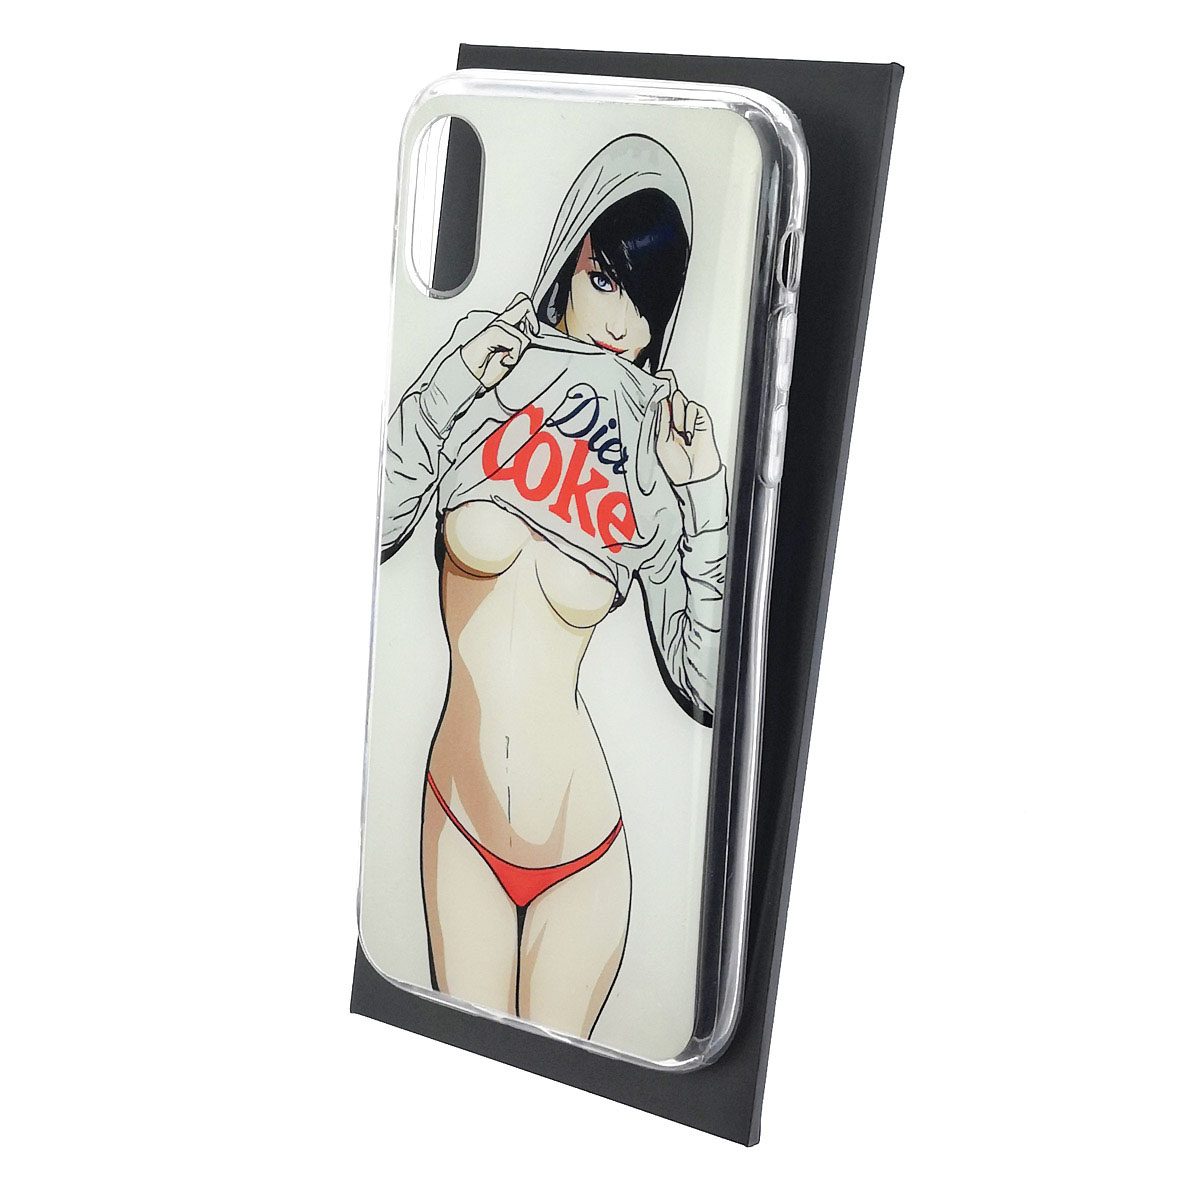 Чехол накладка для APPLE iPhone X, iPhone XS, силикон, глянцевый, рисунок Dier Coke